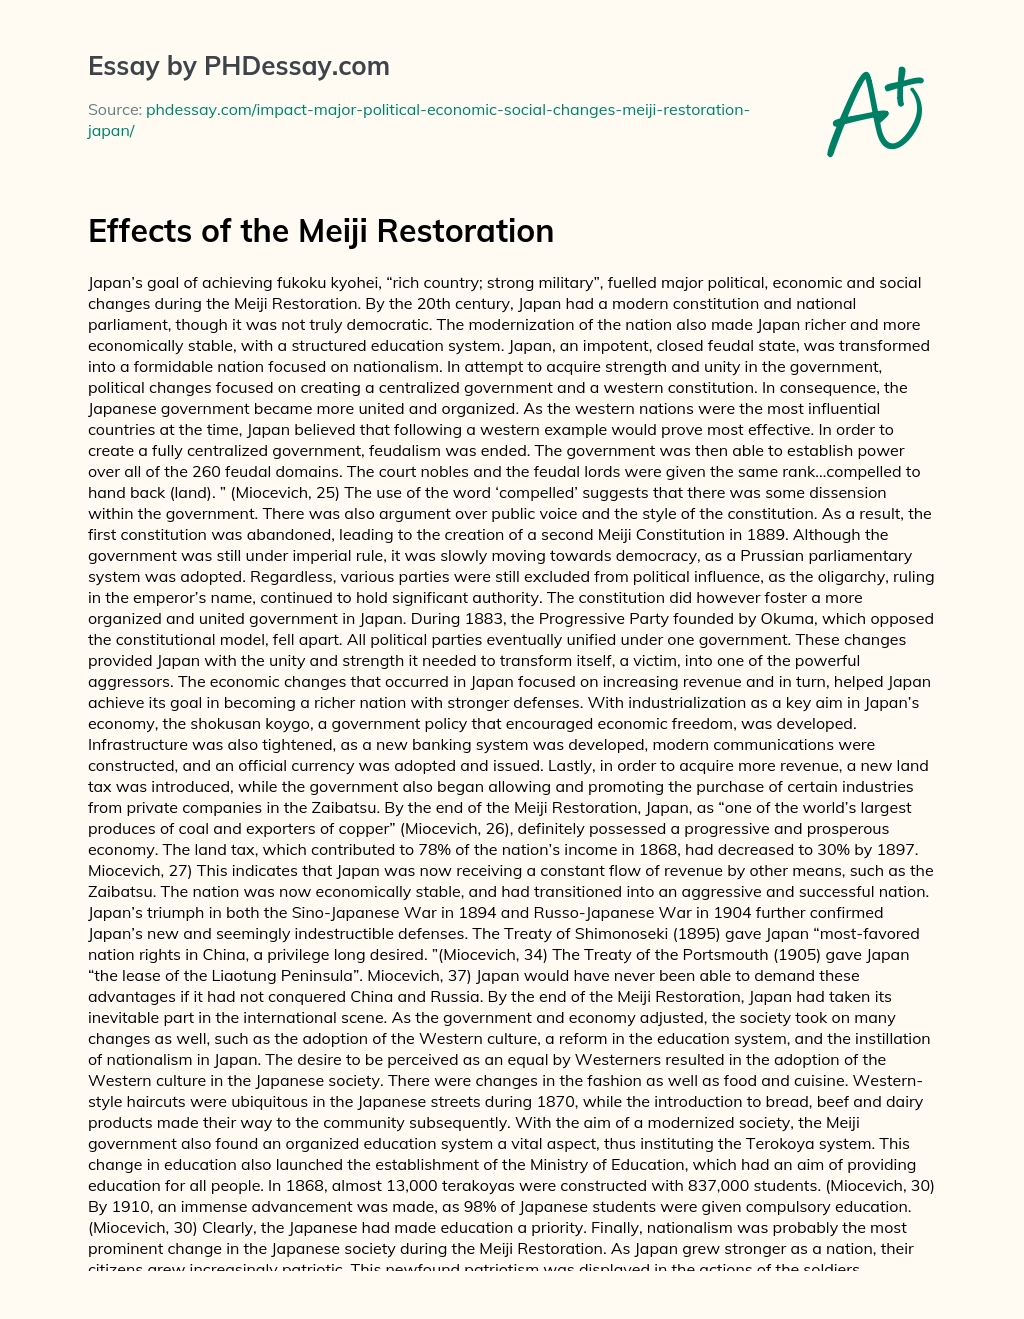 Effects of the Meiji Restoration essay